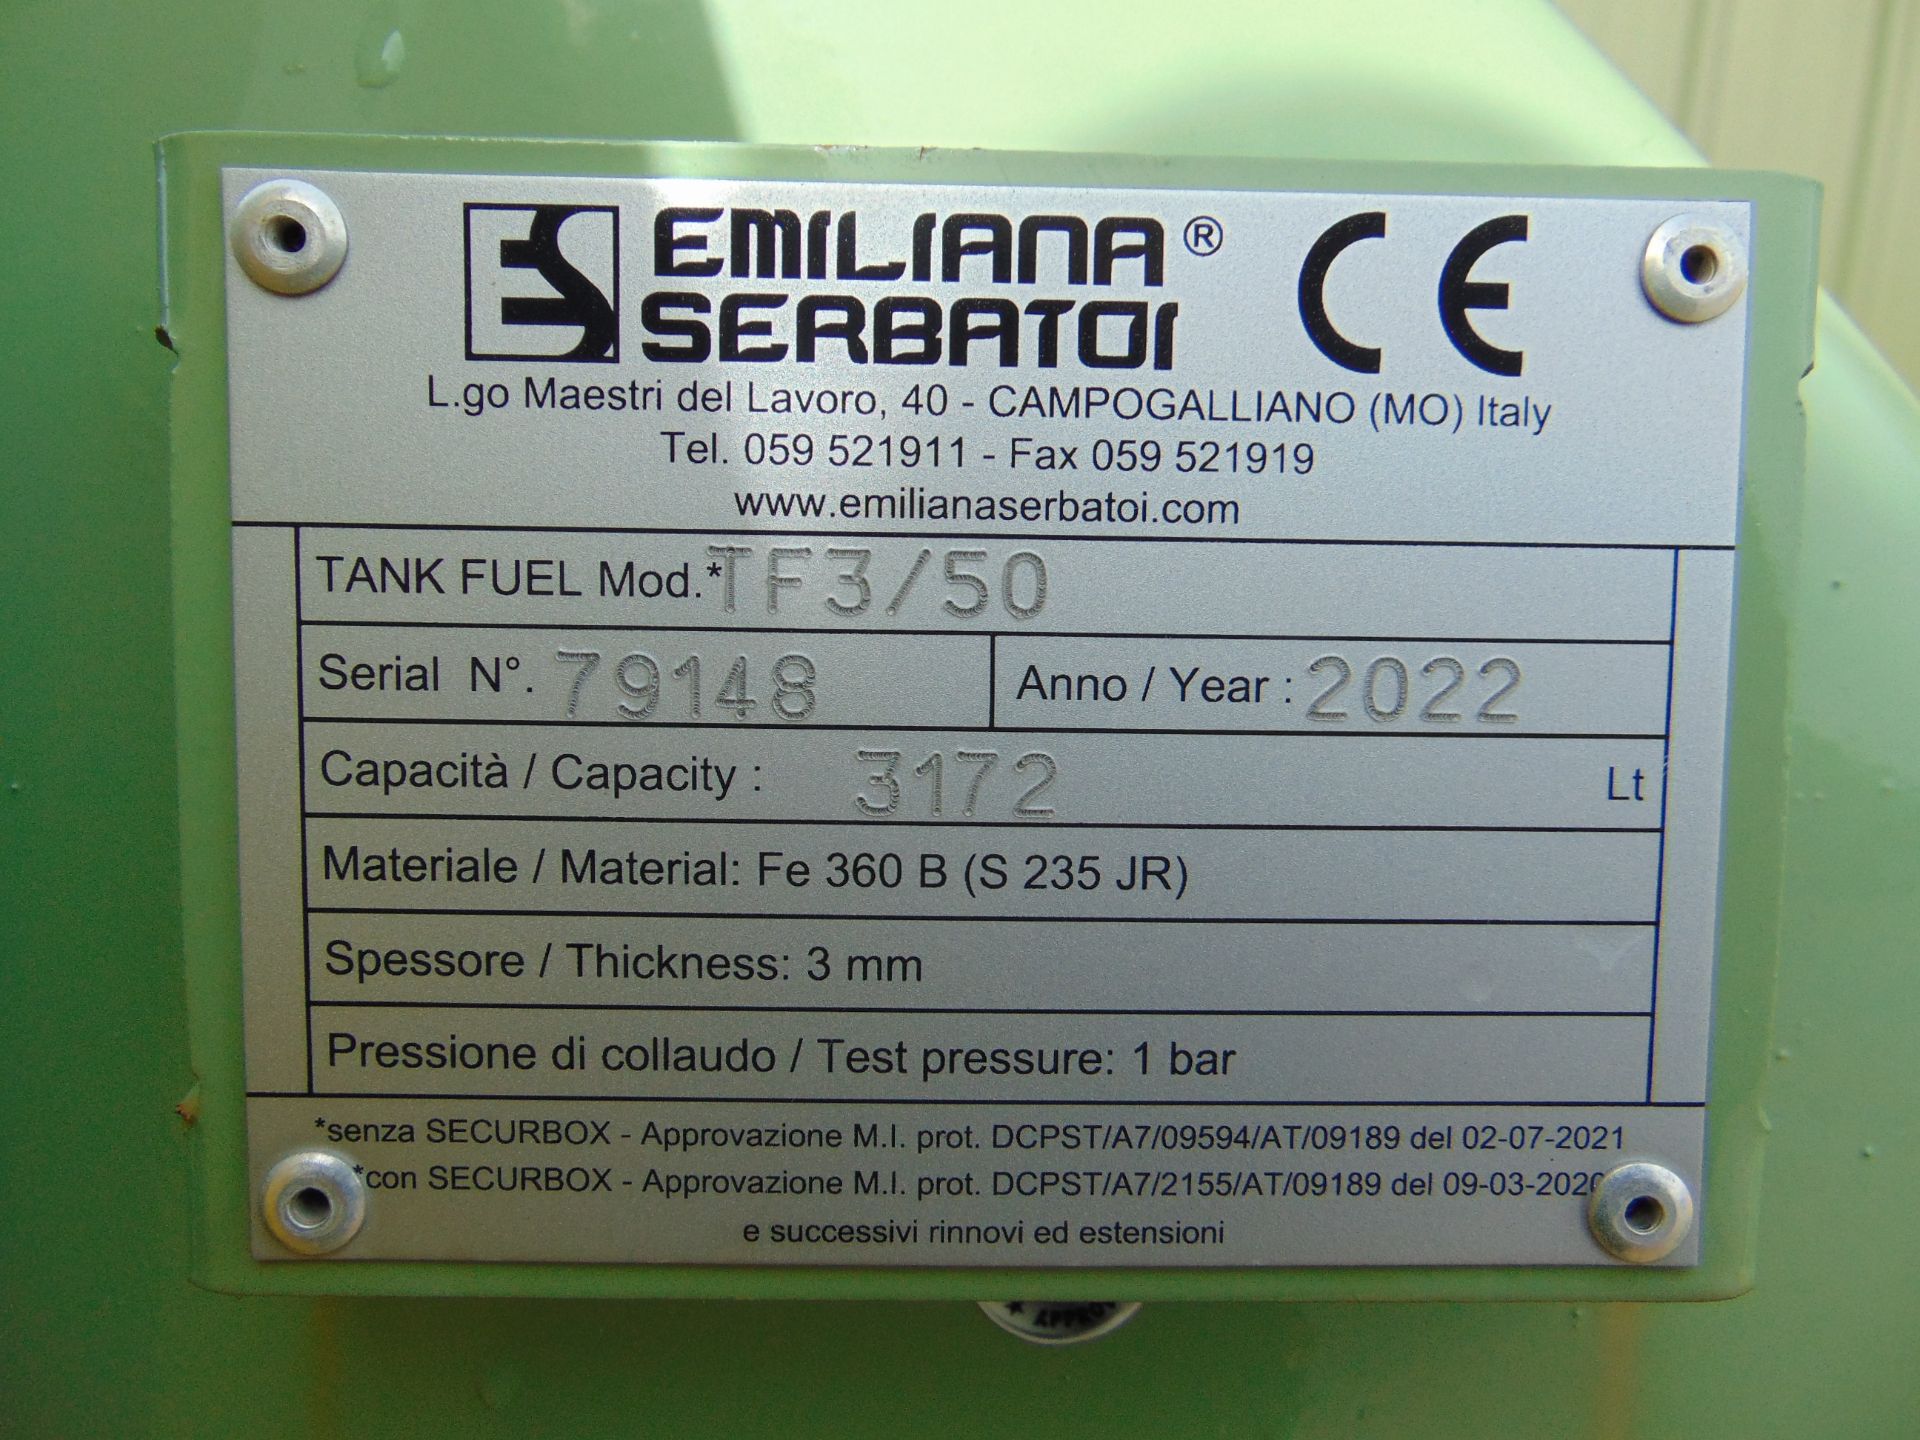 EU Fuel Storage Tank - 3172 Ltr Capacity w/ Electric Dispensing Pump Unit & Nozzle - Image 6 of 8